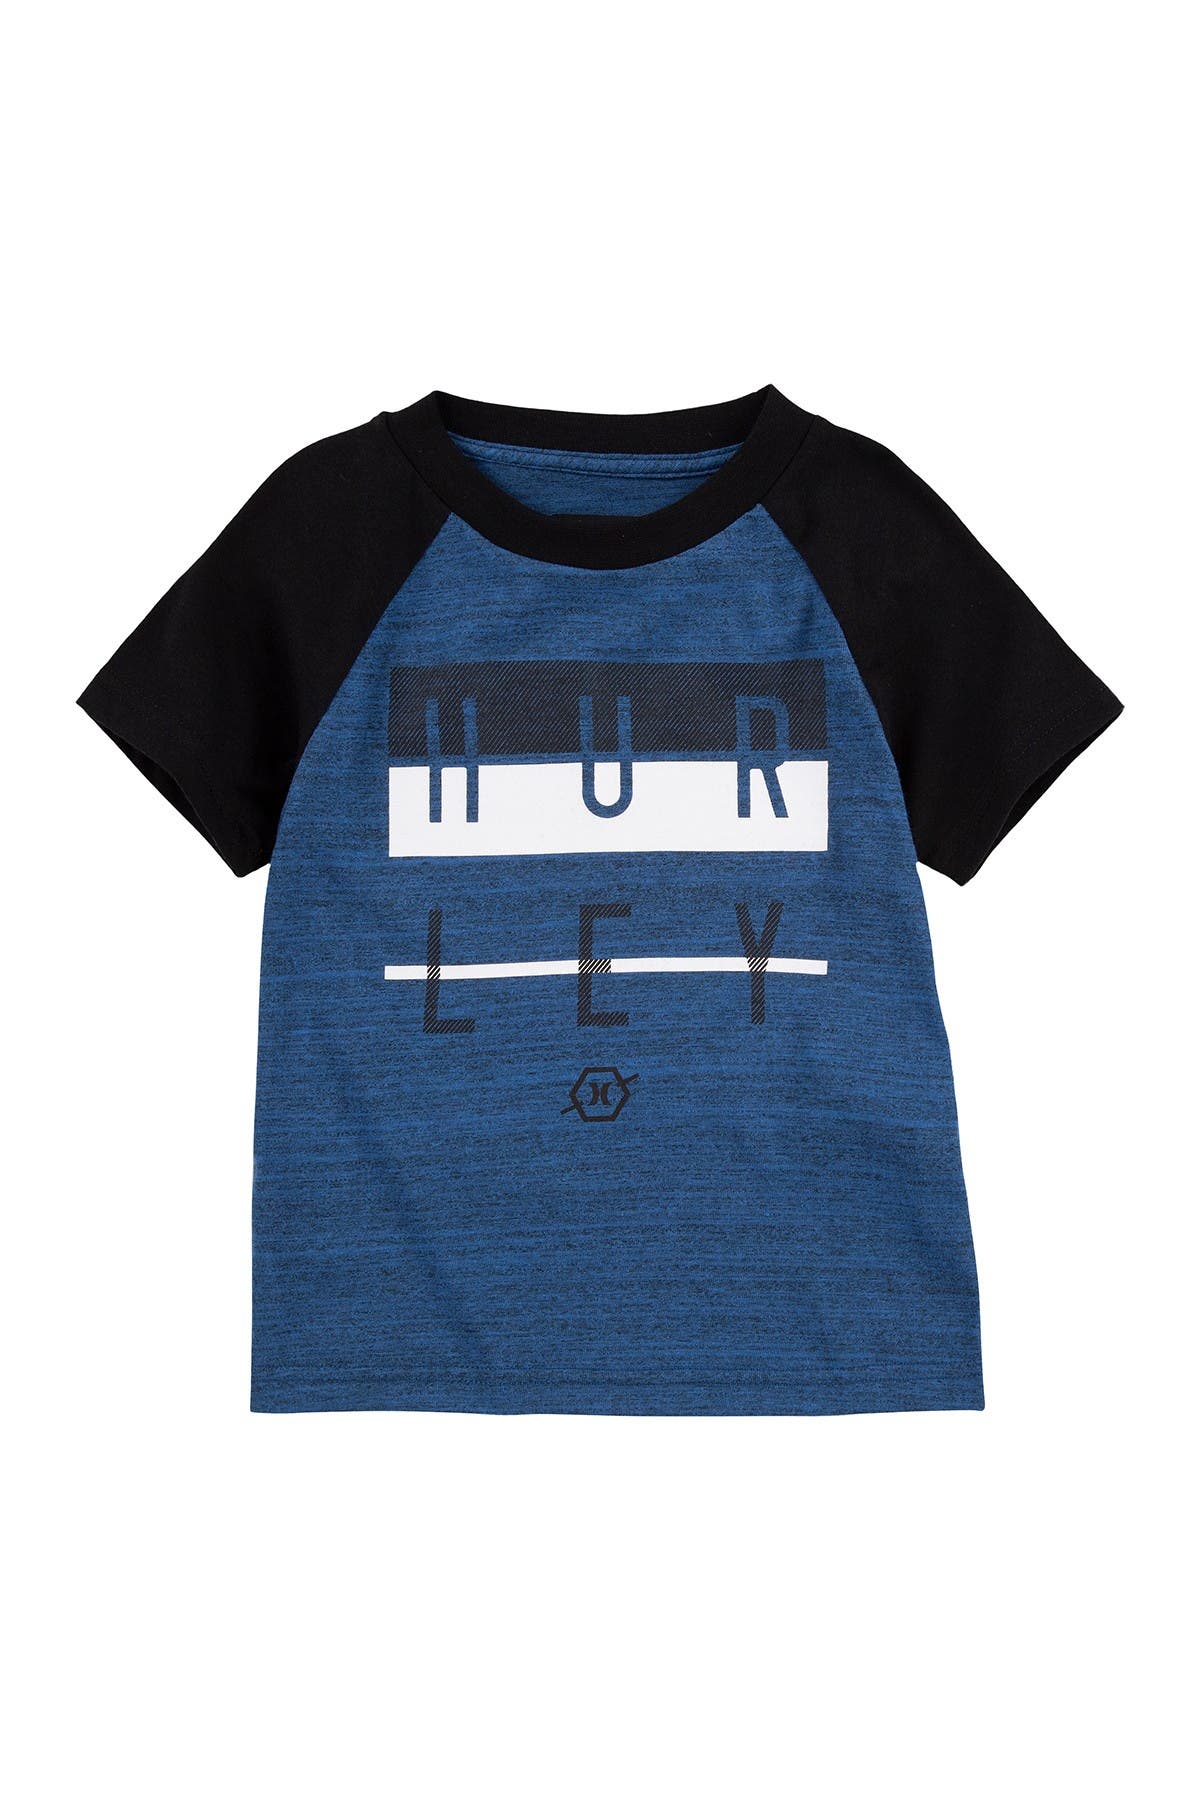 Hurley Kids' Logo Raglan Graphic T-shirt In C3rpacific